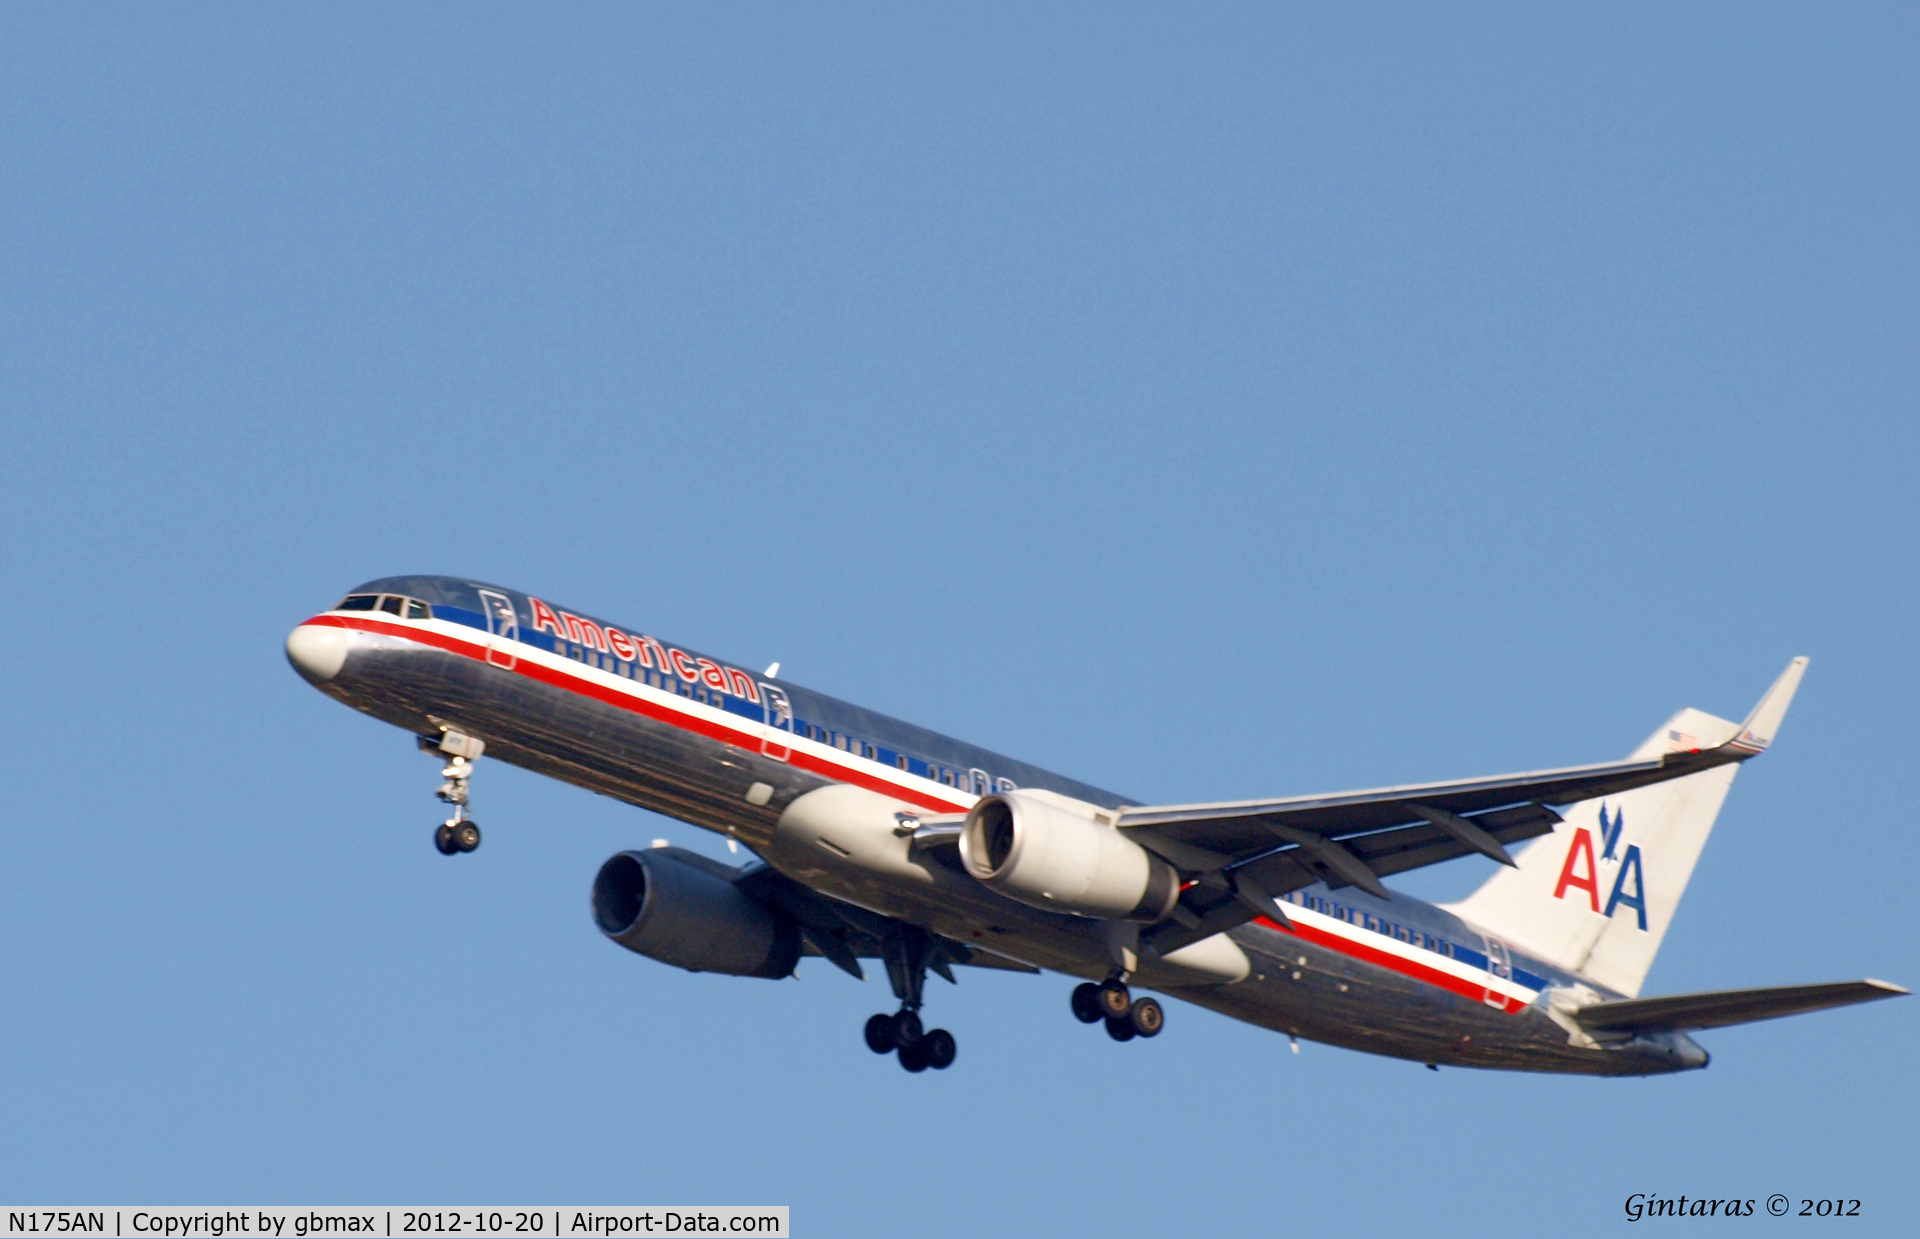 N175AN, 2001 Boeing 757-223 C/N 32394, Going to a landing @ JFK